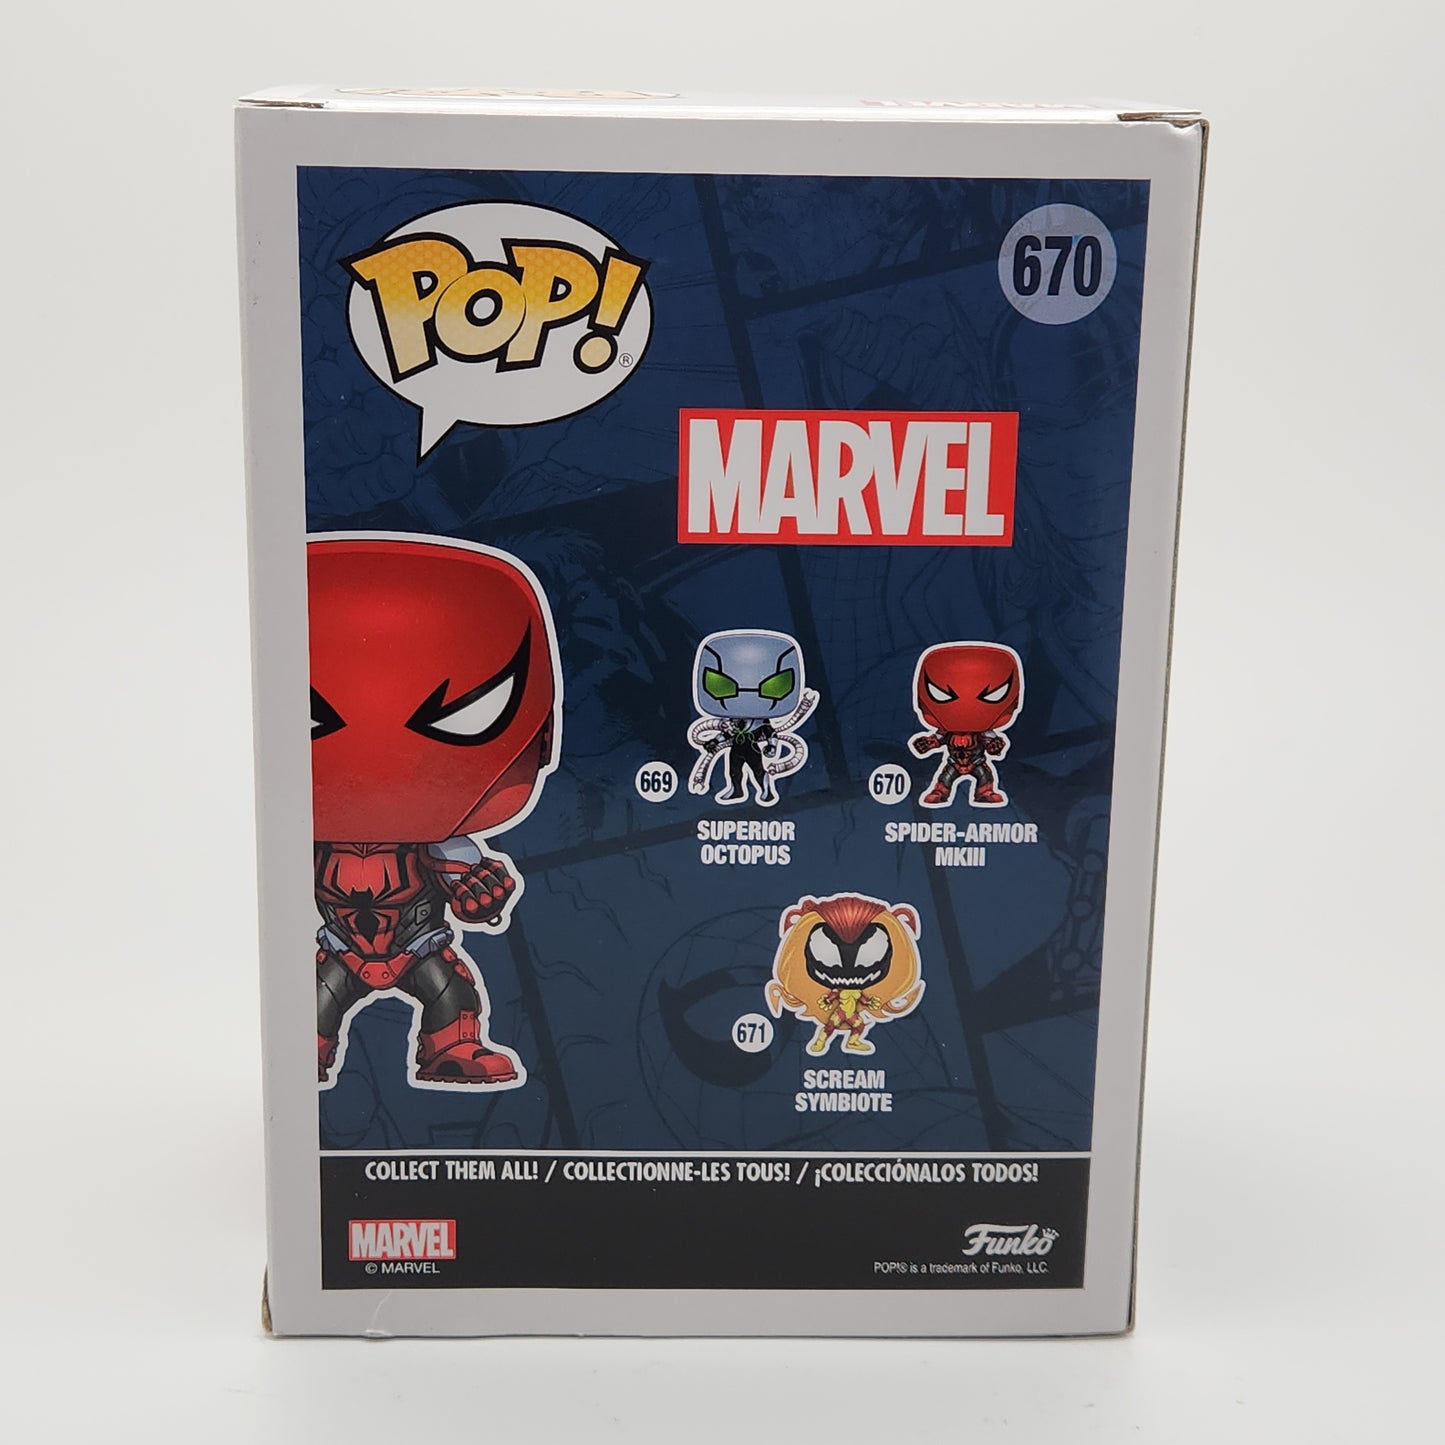 Funko Pop! Marvel- Spider-Armor MKIII